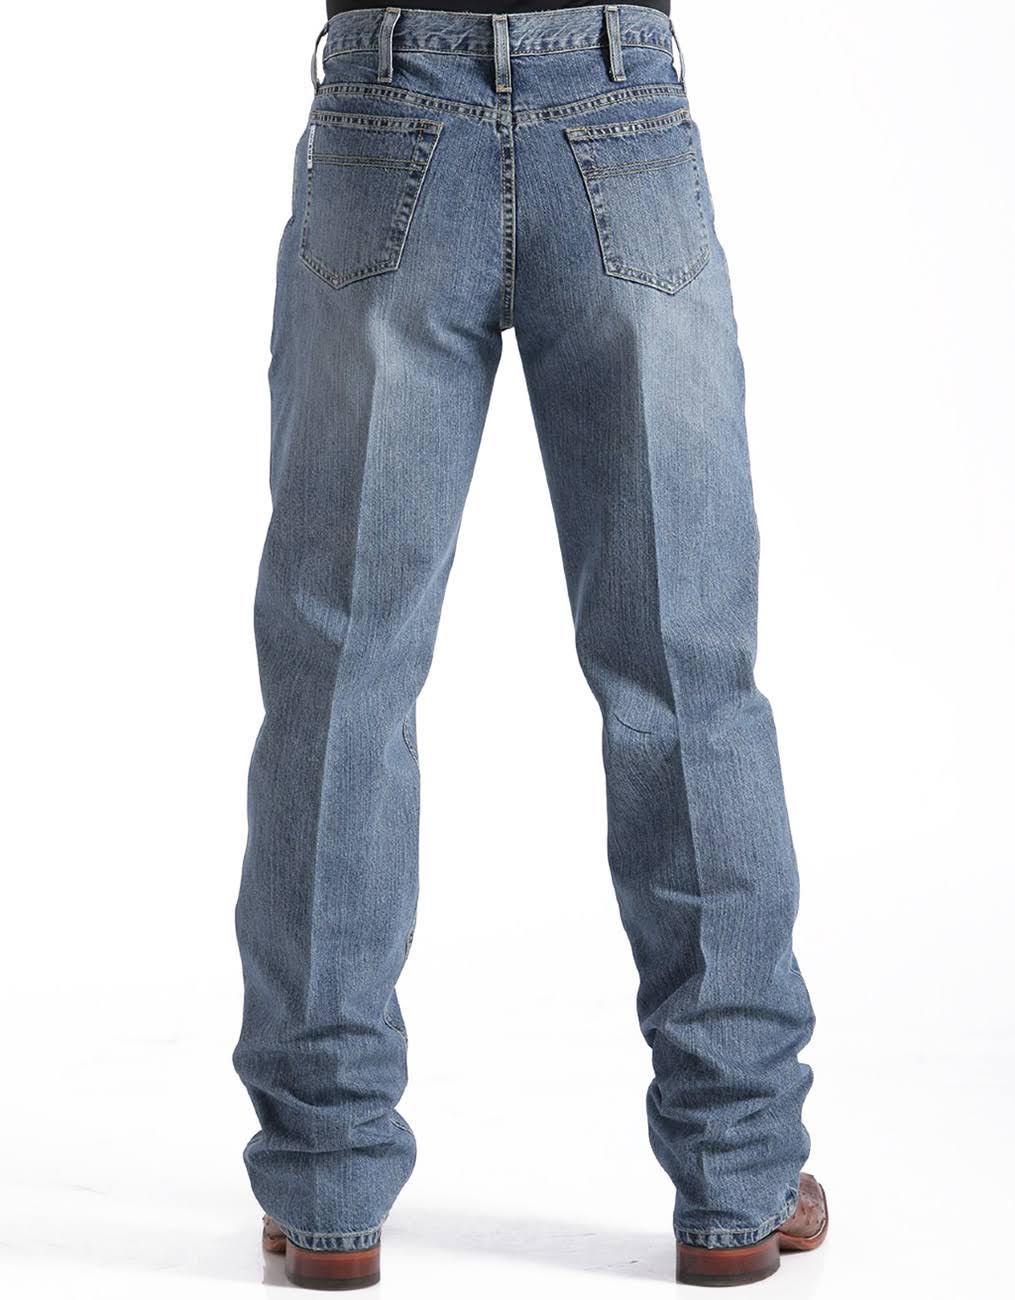 Cinch Men&s White Label Jeans - Medium Stonewash - 30x38 - WGL-03